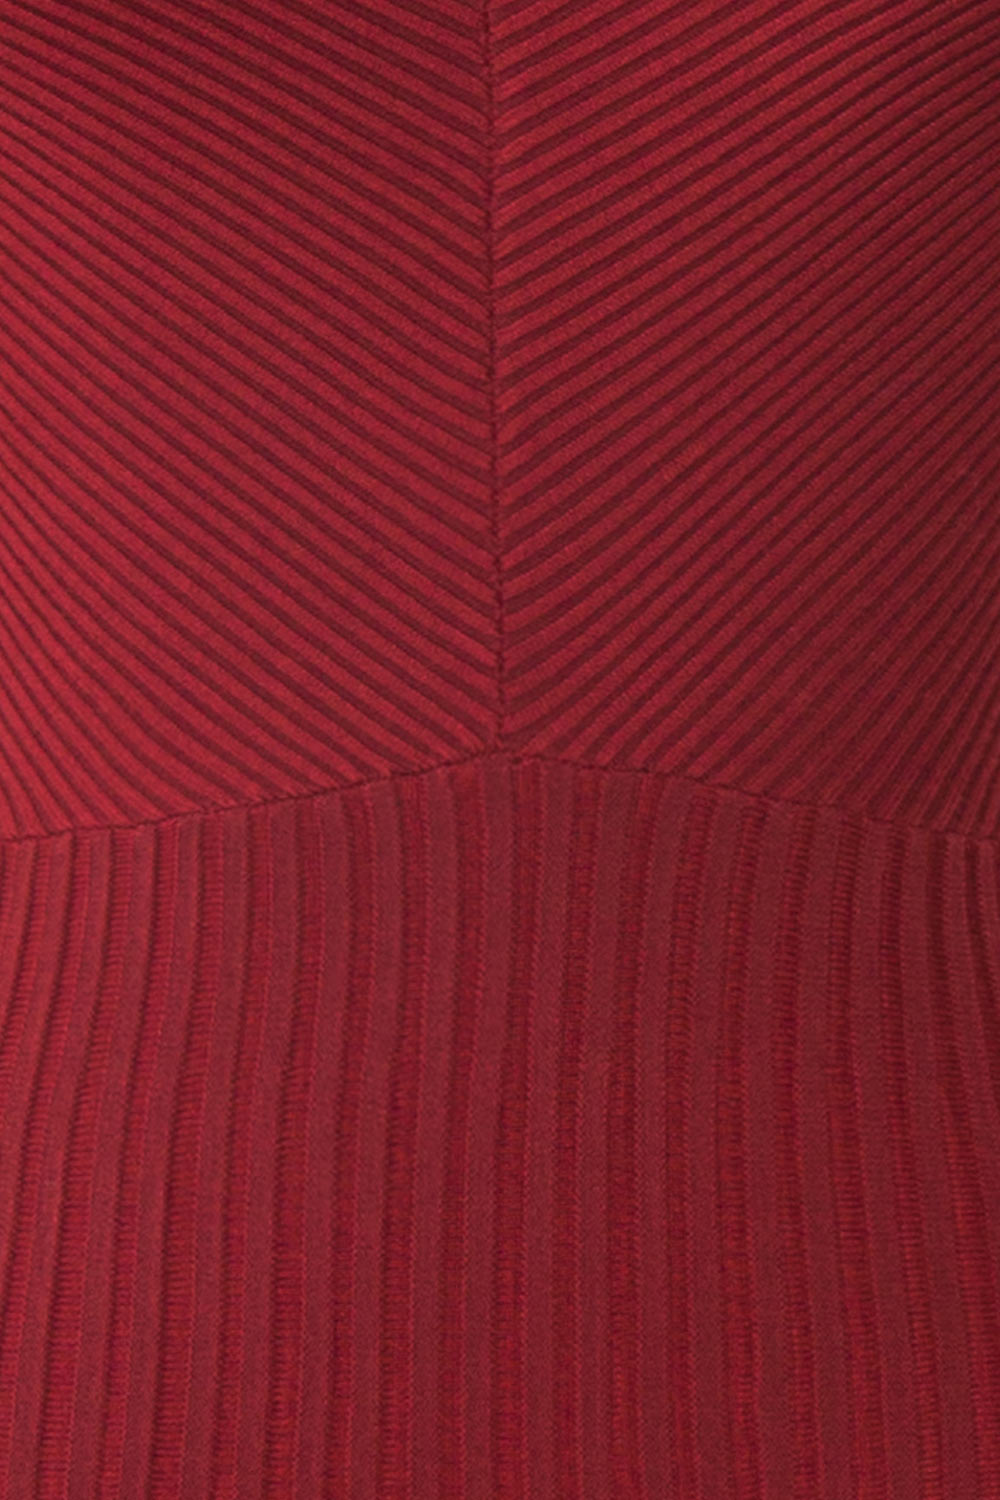 Allegorie Burgundy Knit A-Line Dress | Boutique 1861 fabric detail 